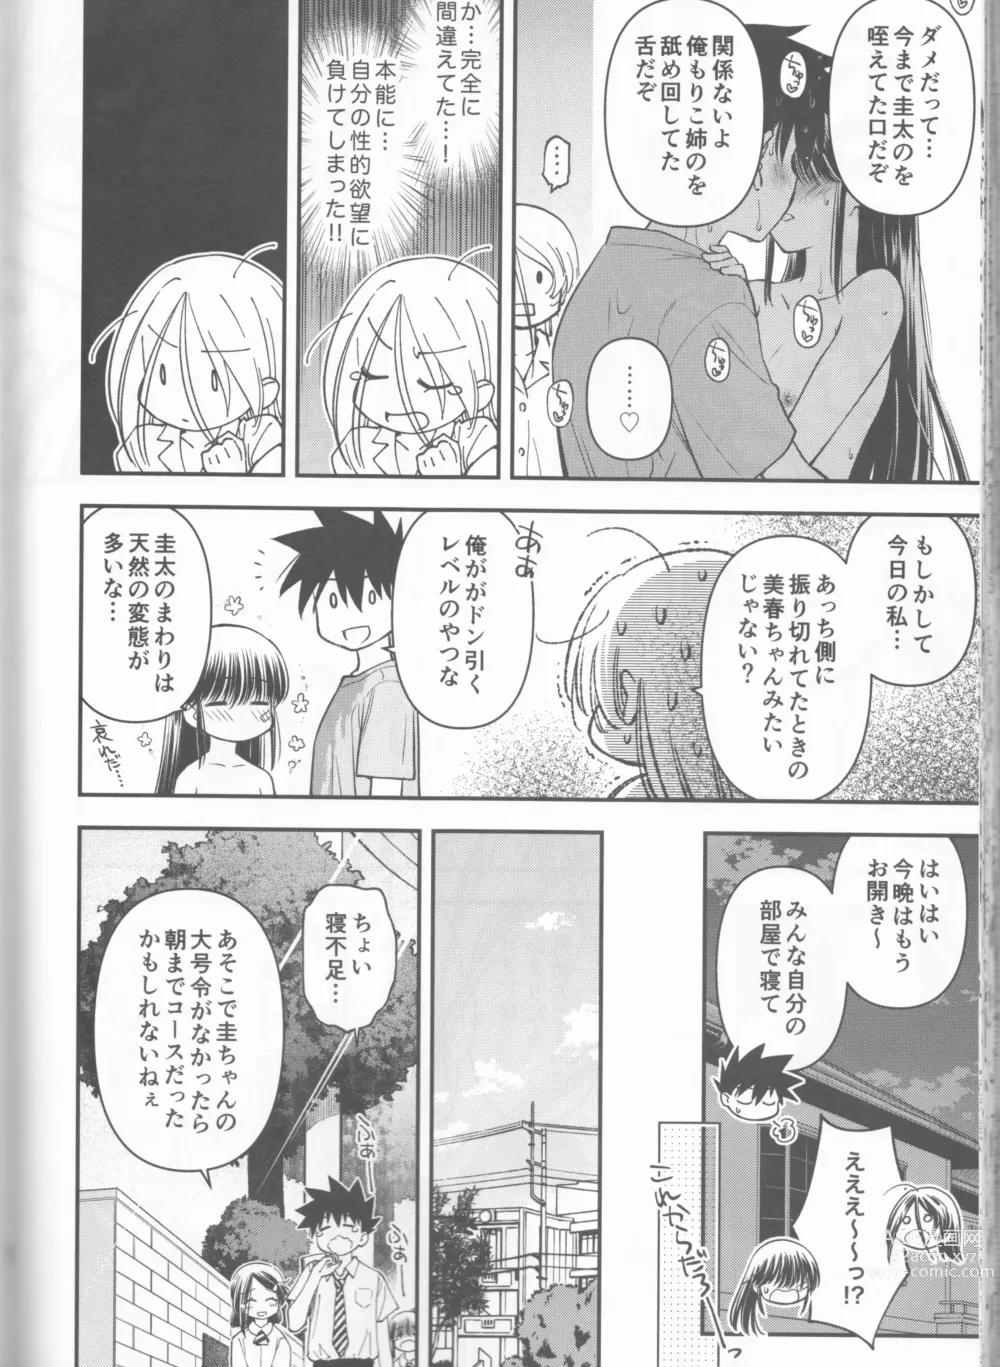 Page 67 of doujinshi kxs.